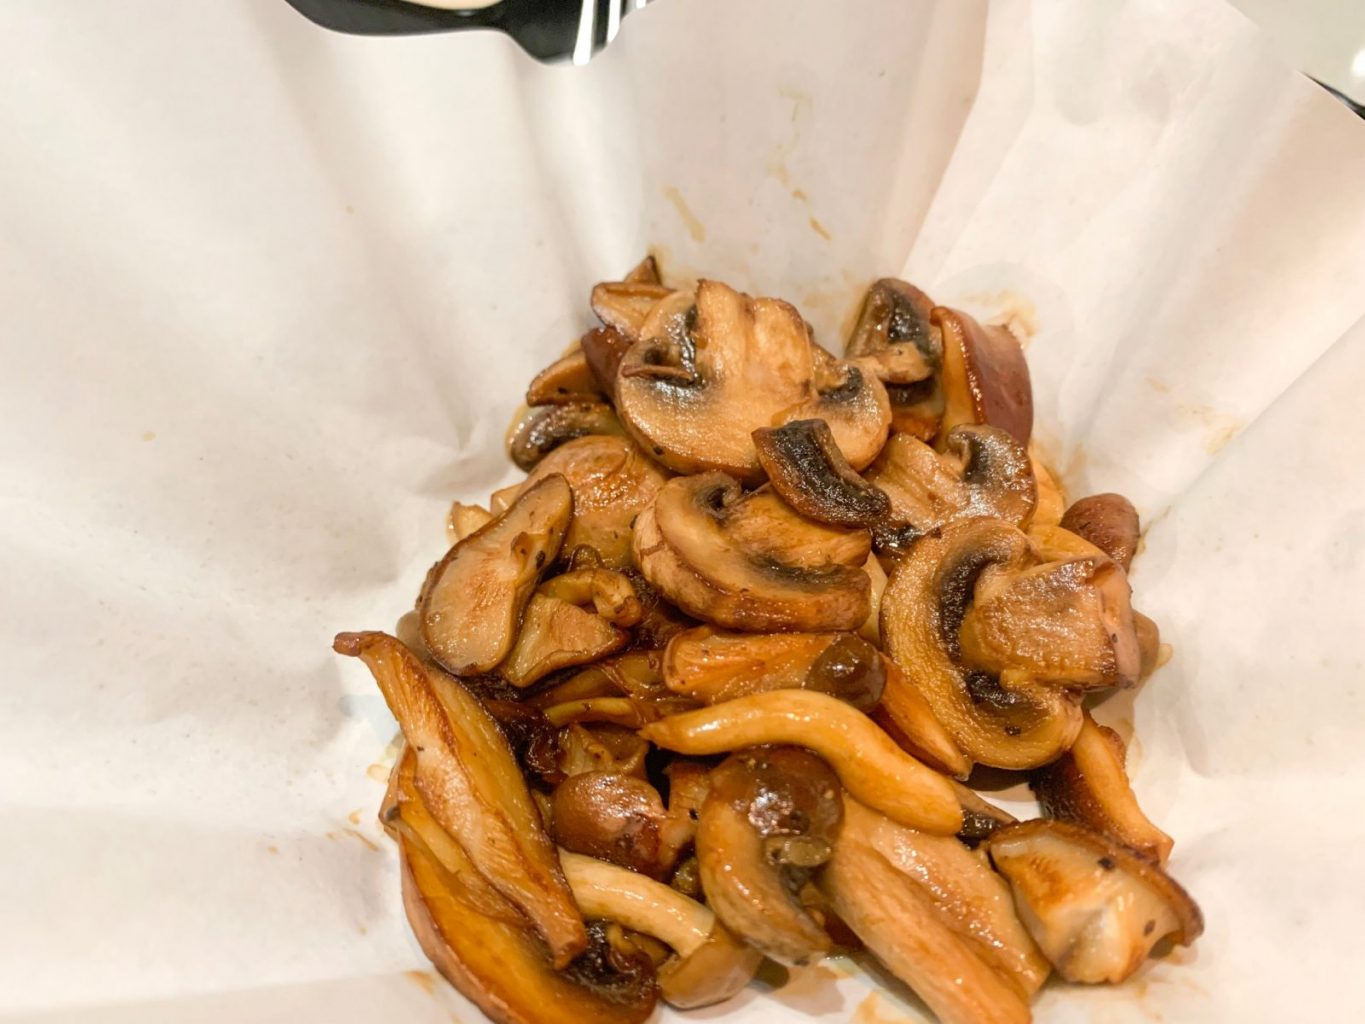 small portions of mushrooms at Epcot